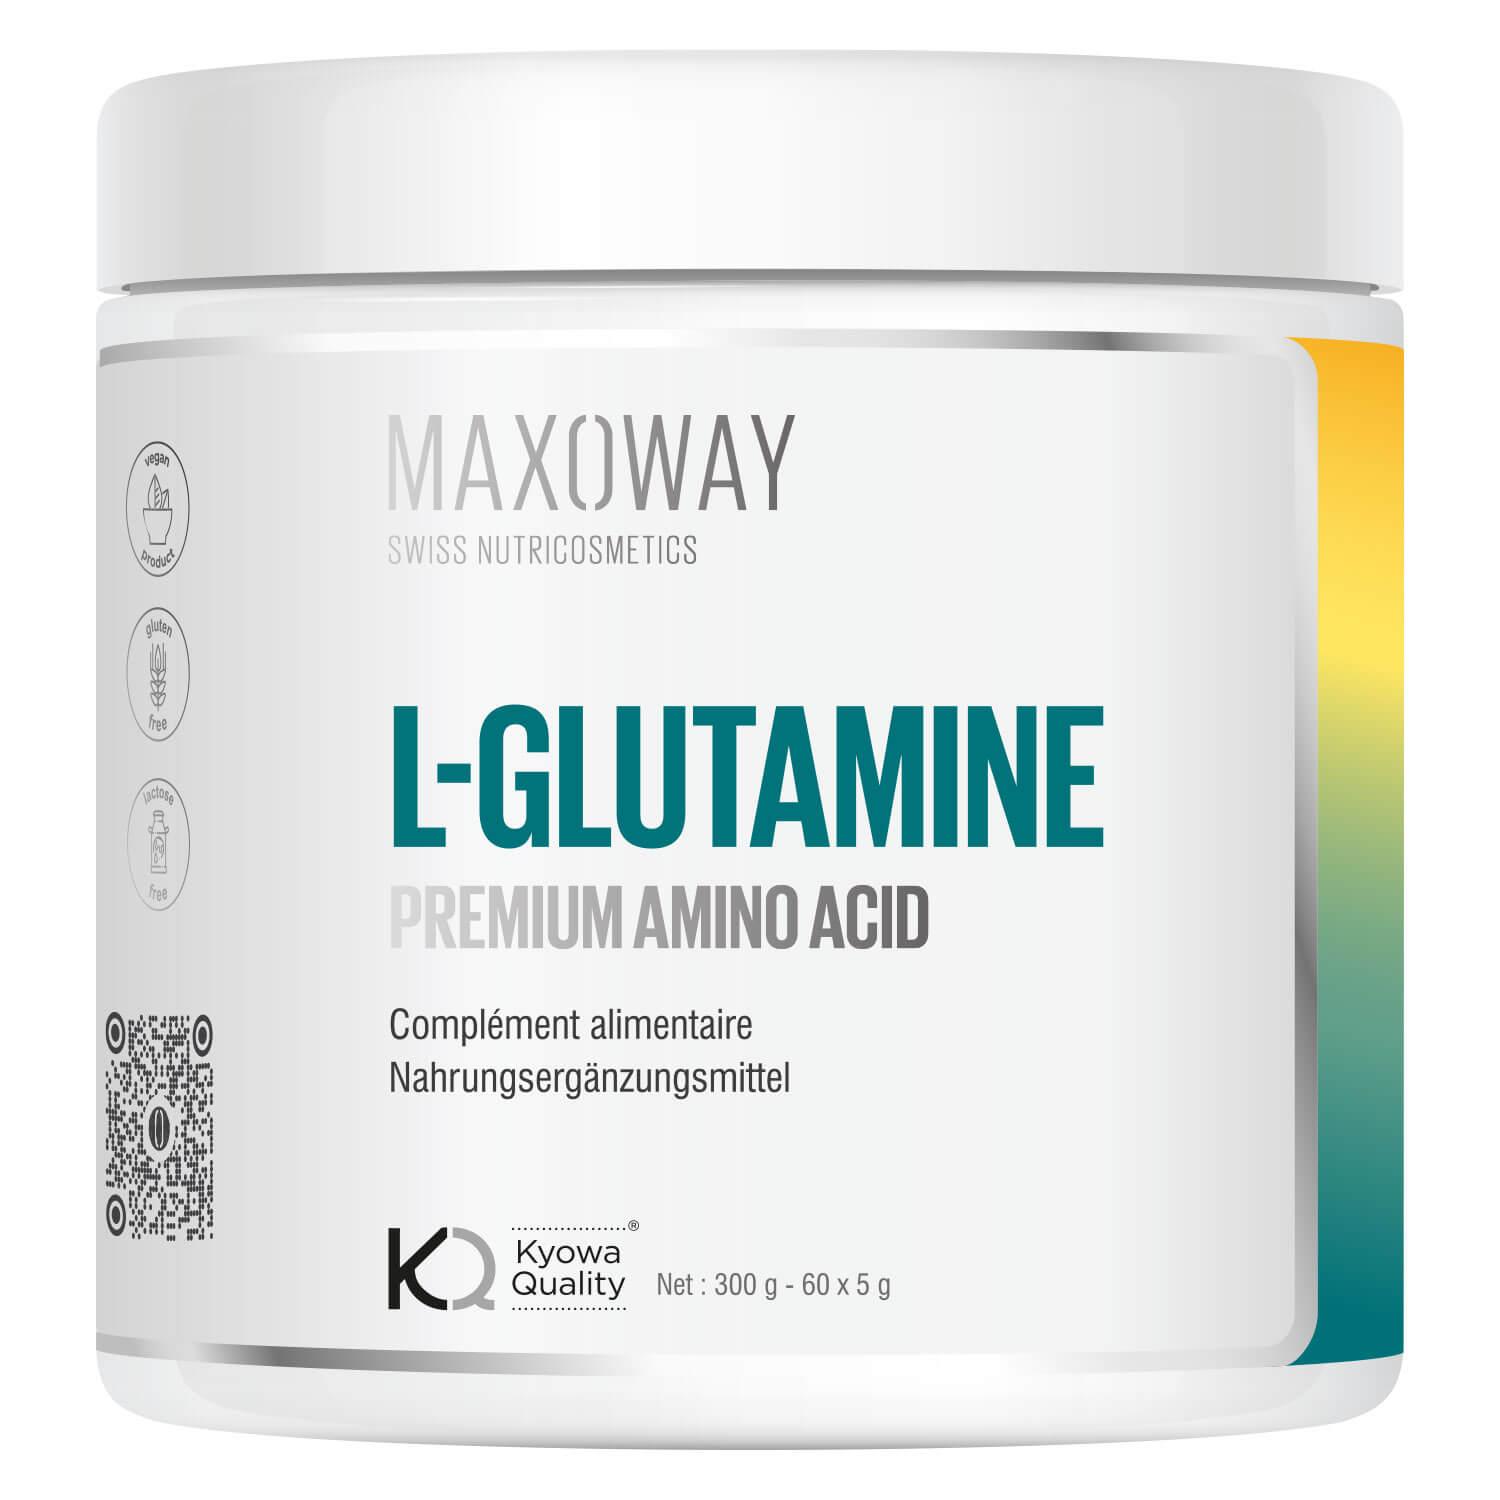 Maxoway - L-Glutamine